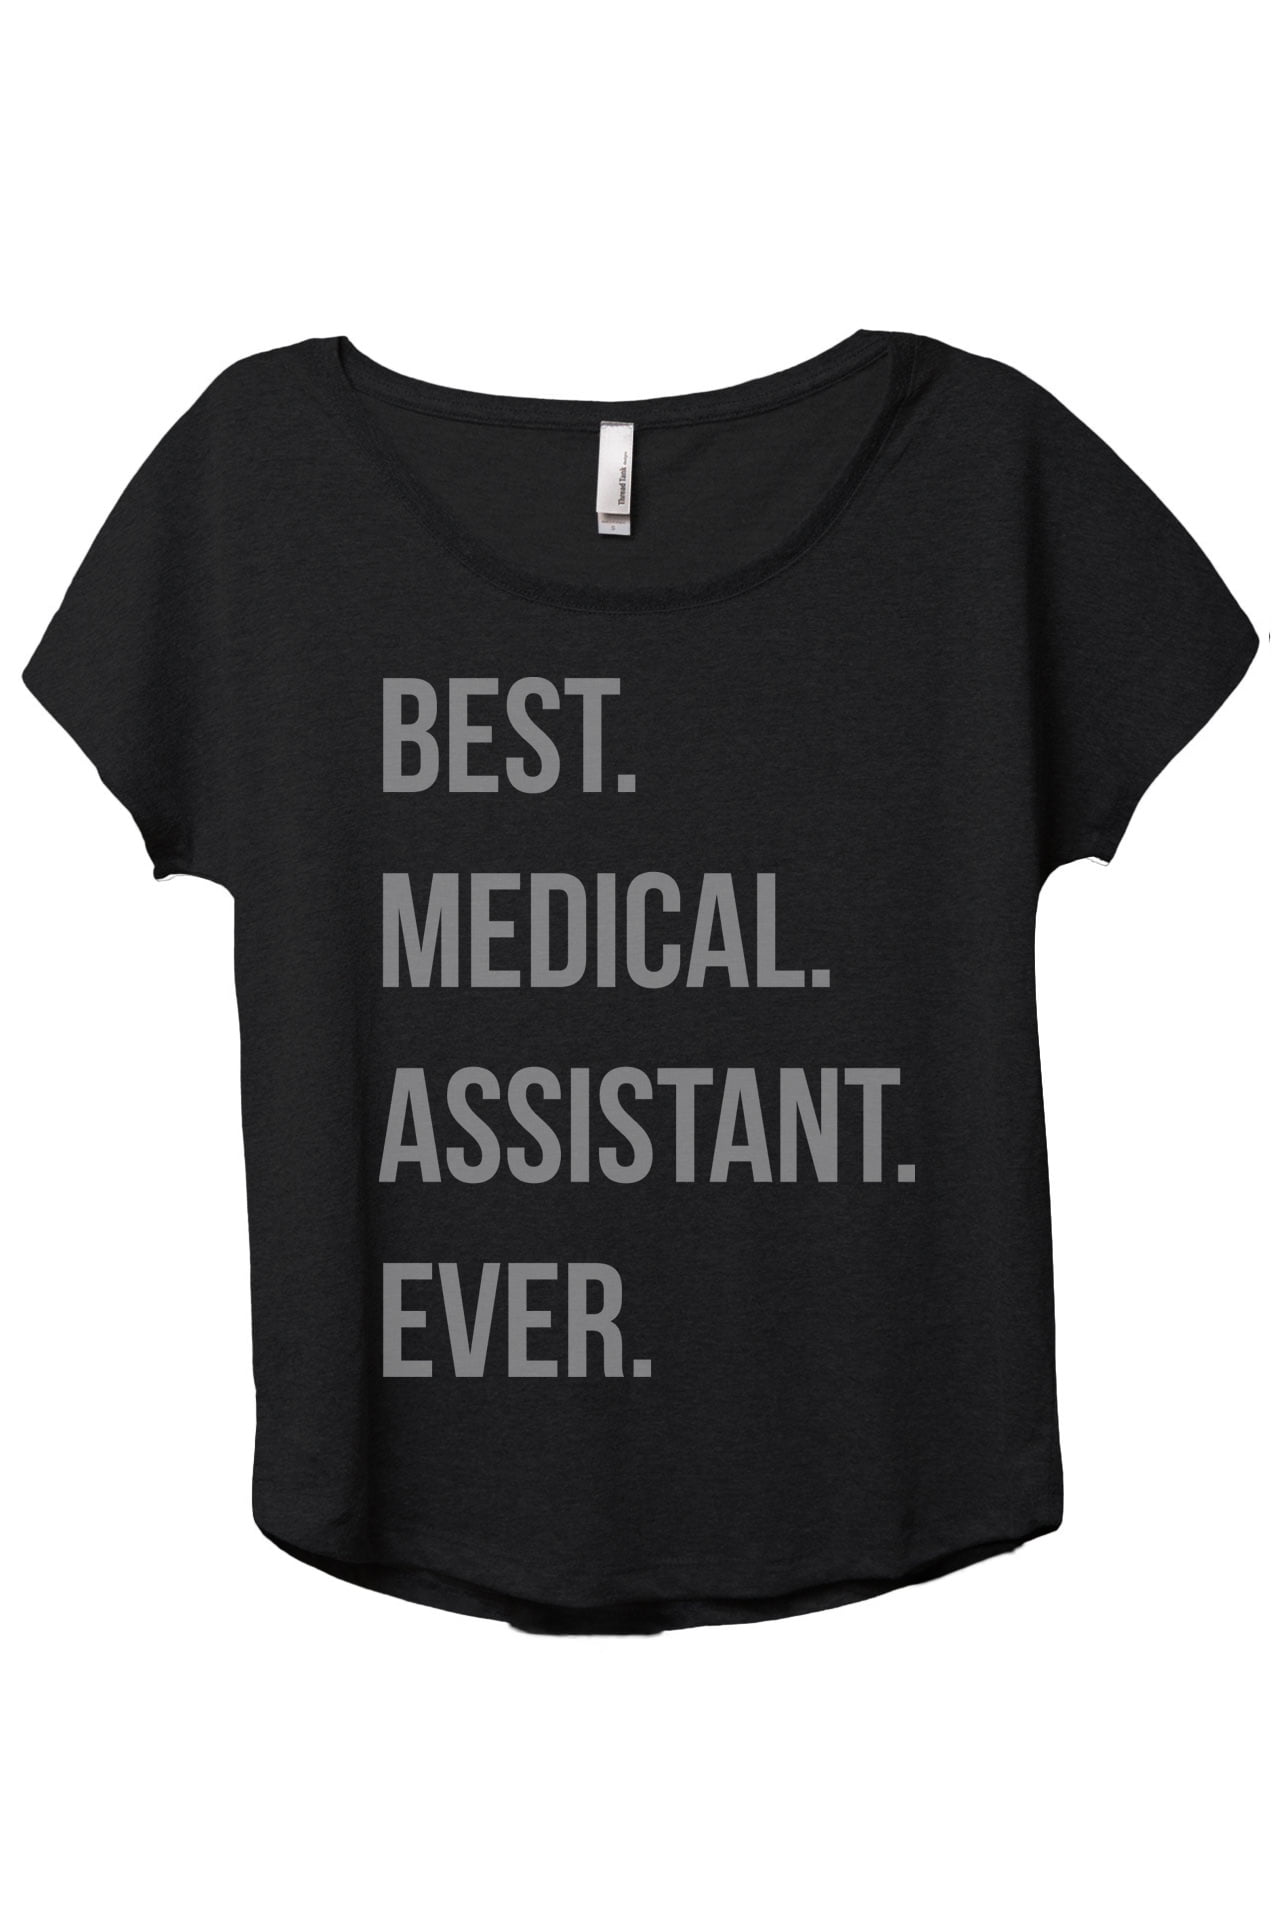 Hoodie Sheep Fly Medical Assistant Mom Tee Shirt Sweatshirt 